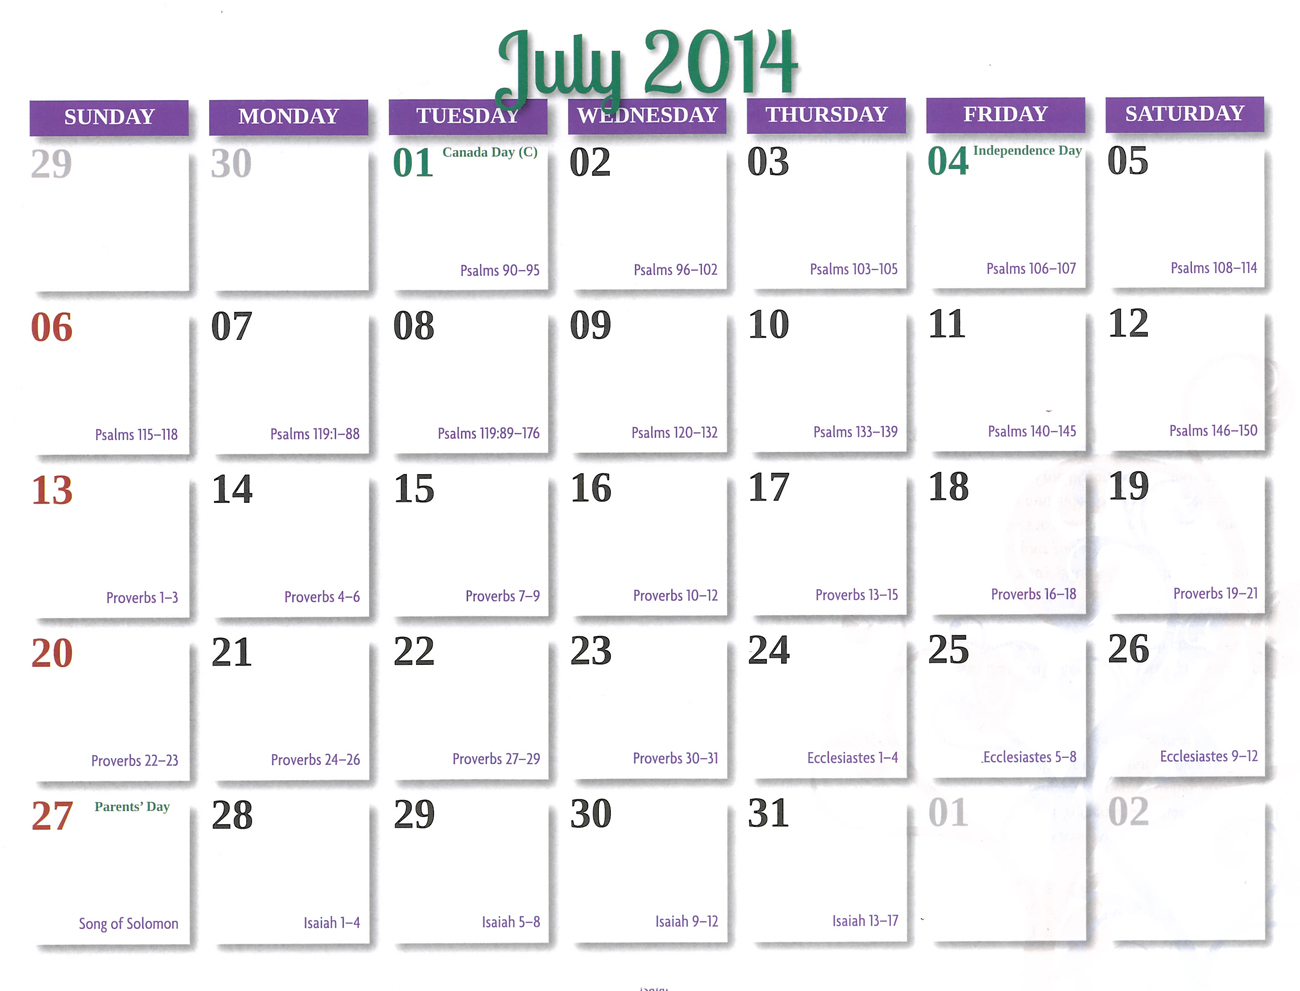 2014 Prophecy Calendar: July - Prophecies of Joel